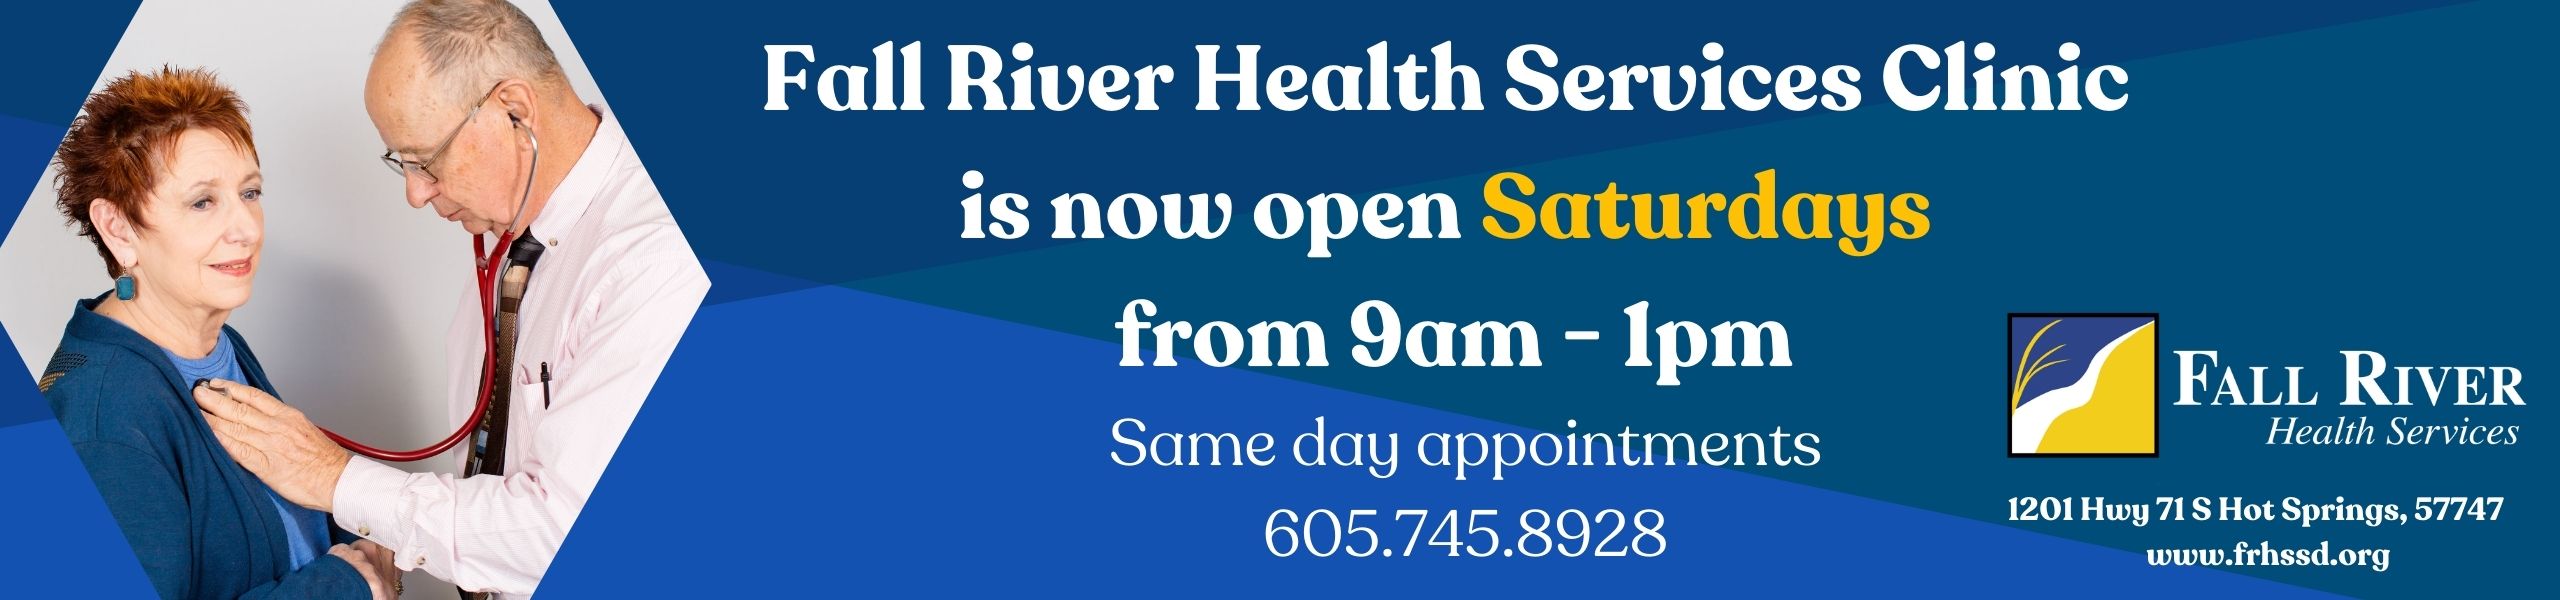 Fall River Health Services Open Saturdays